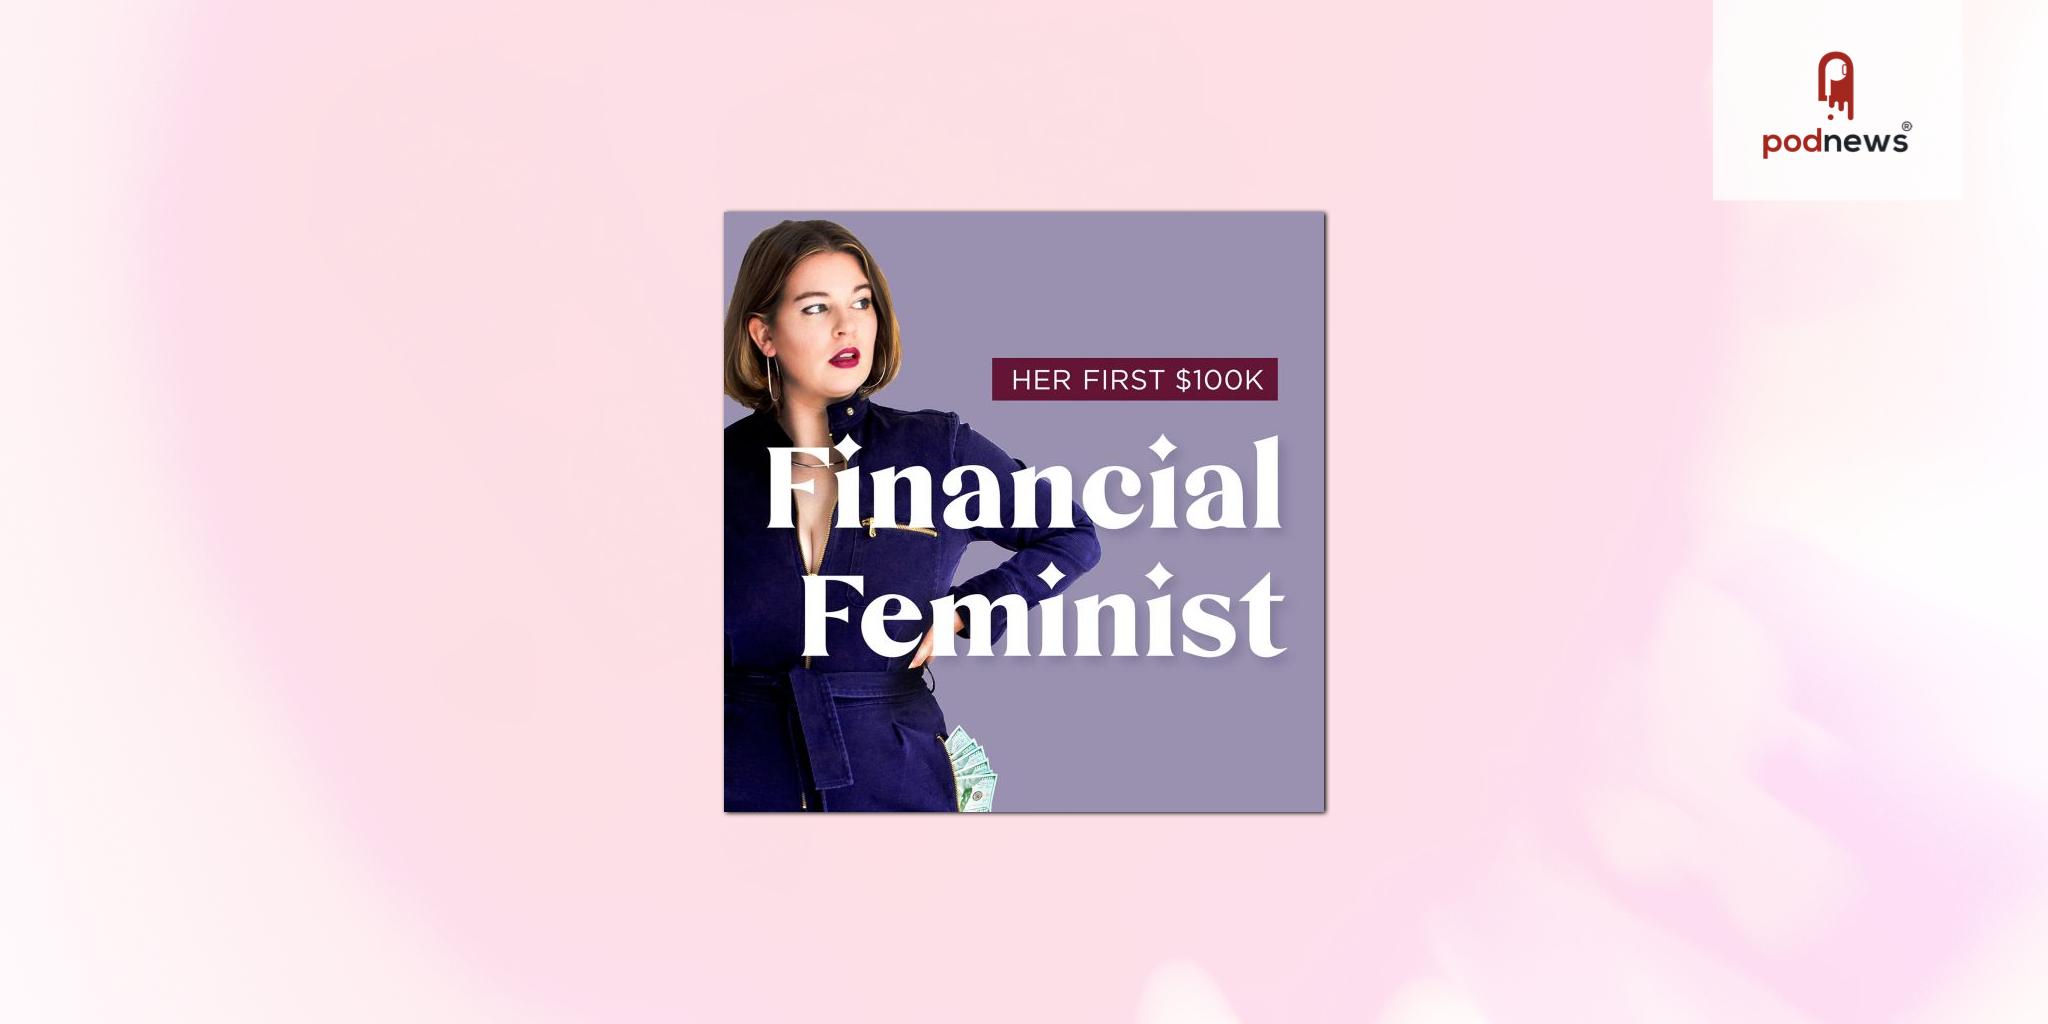 AdLarge Announces Partnership with Tori Dunlap on “Financial Feminist” Podcast